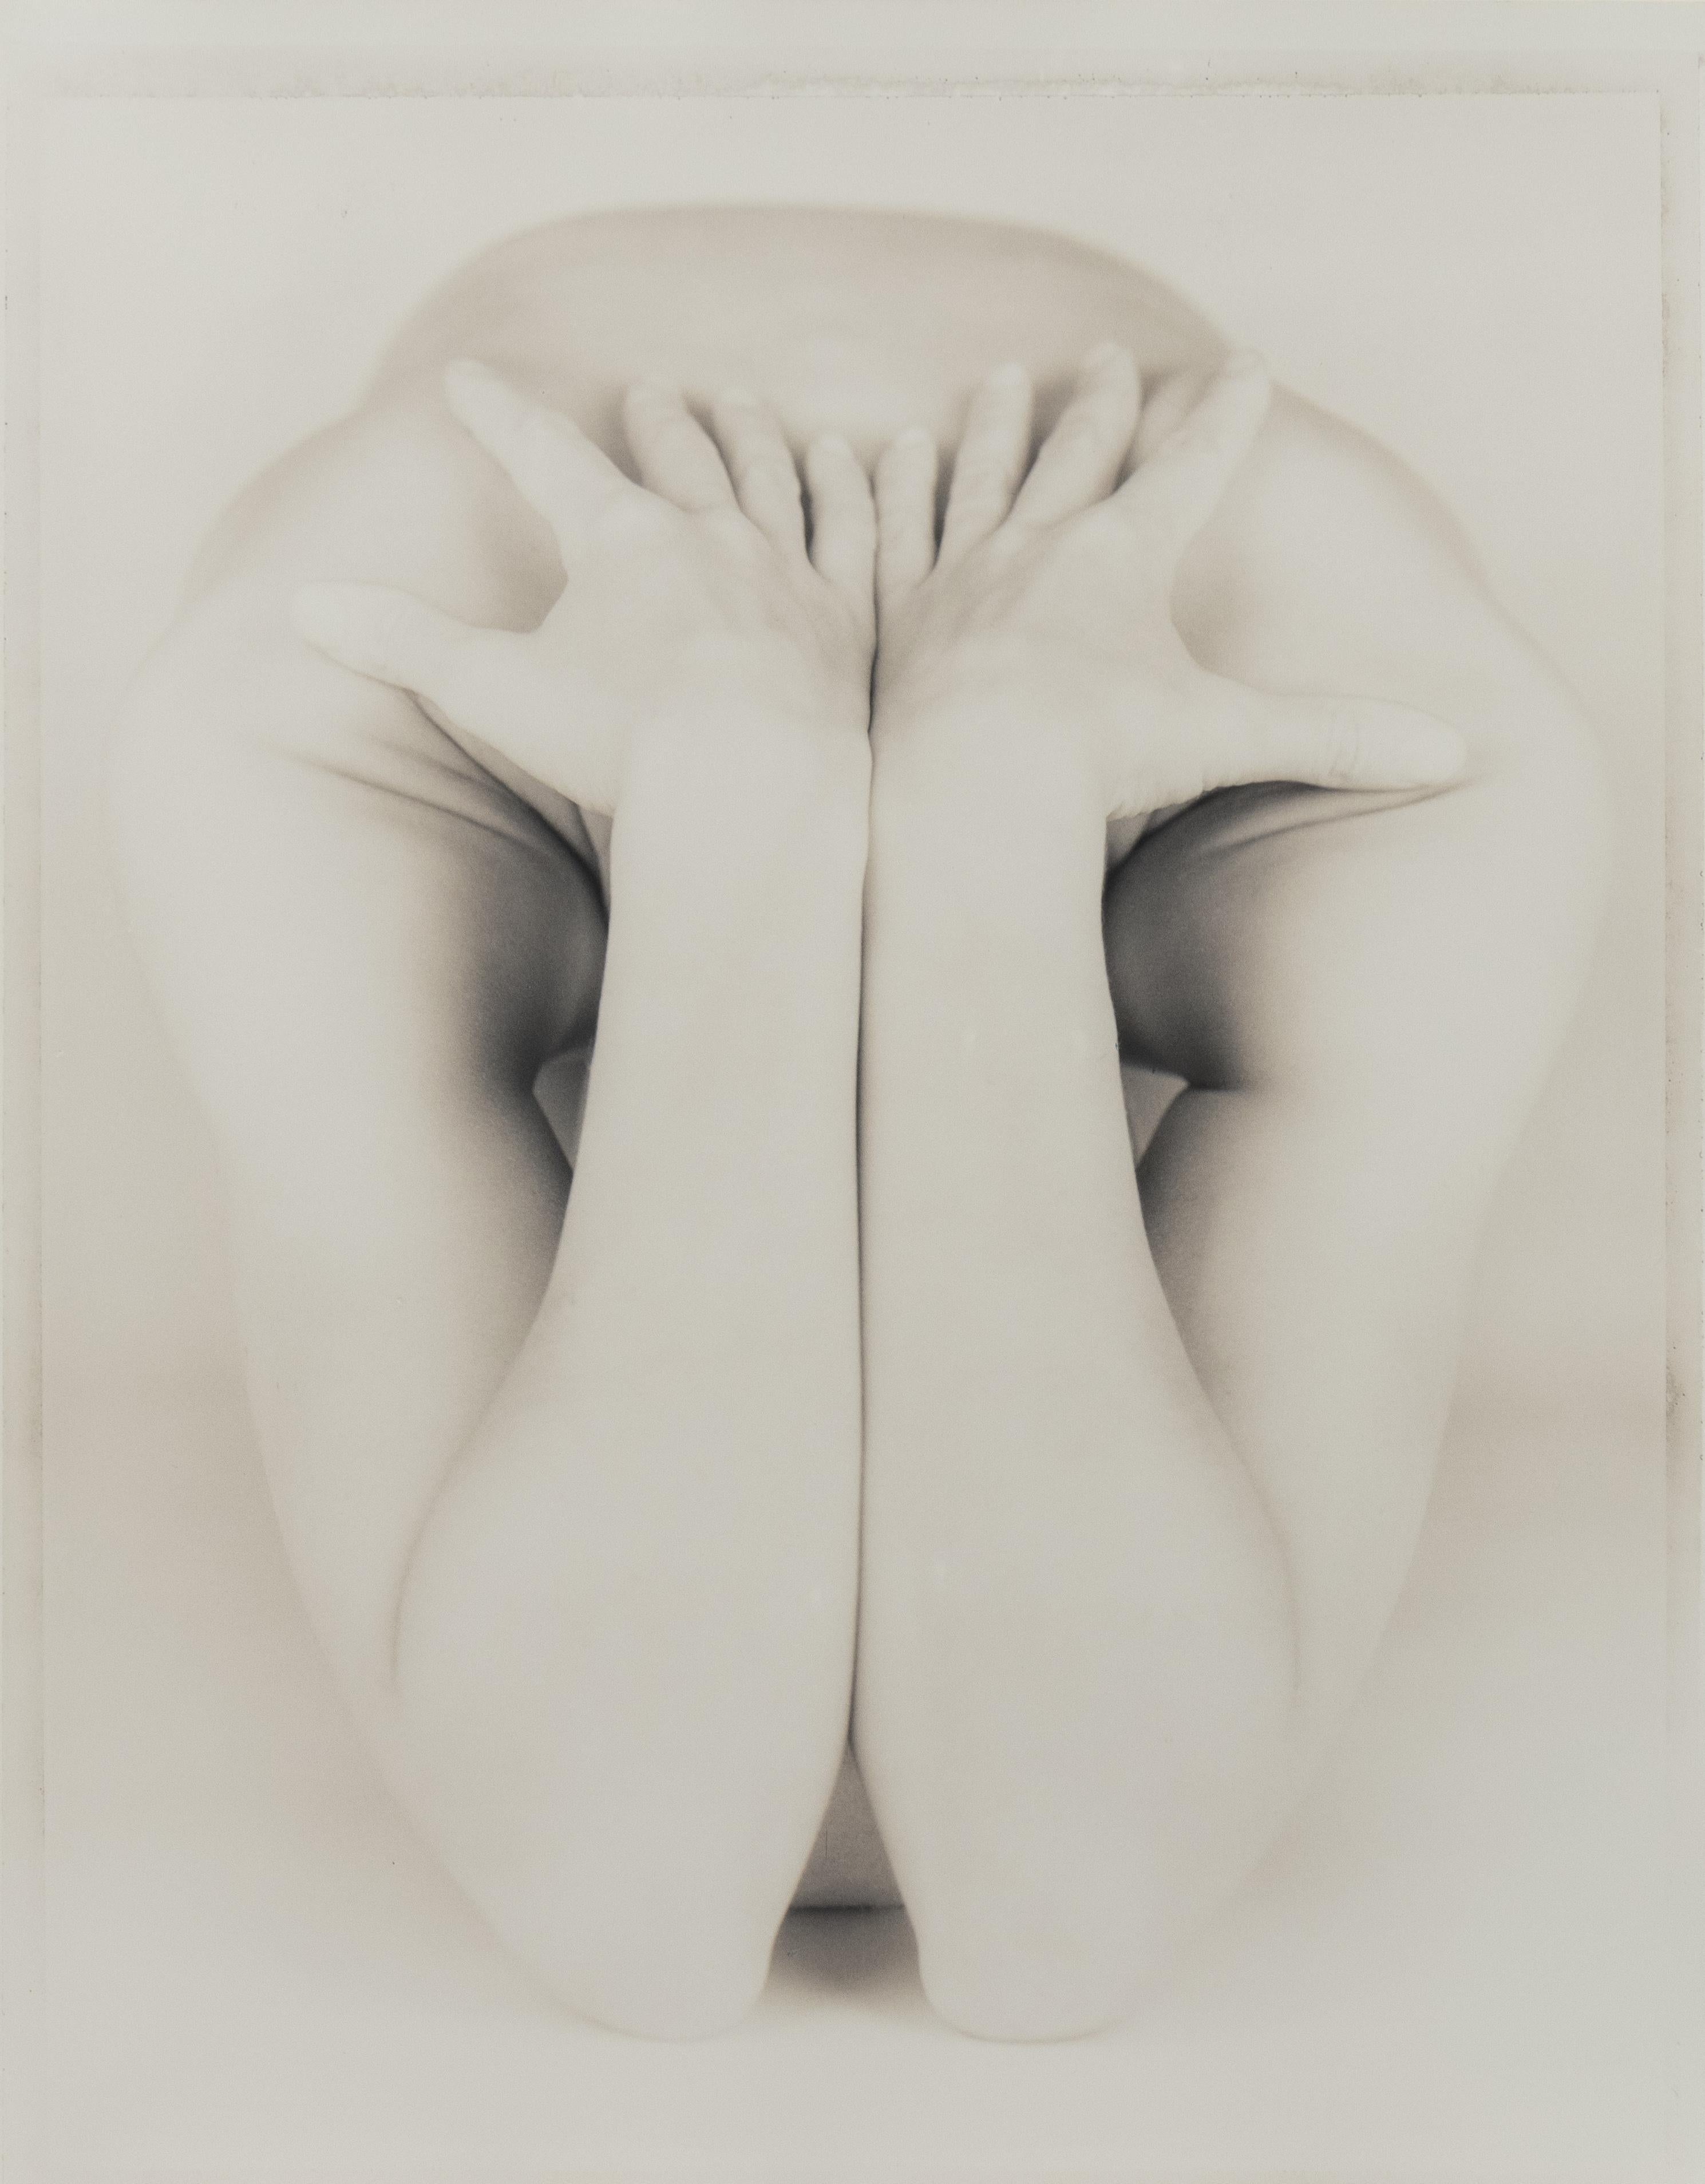 Ron van Dongen Black and White Photograph - Study #4, After Minkkinen